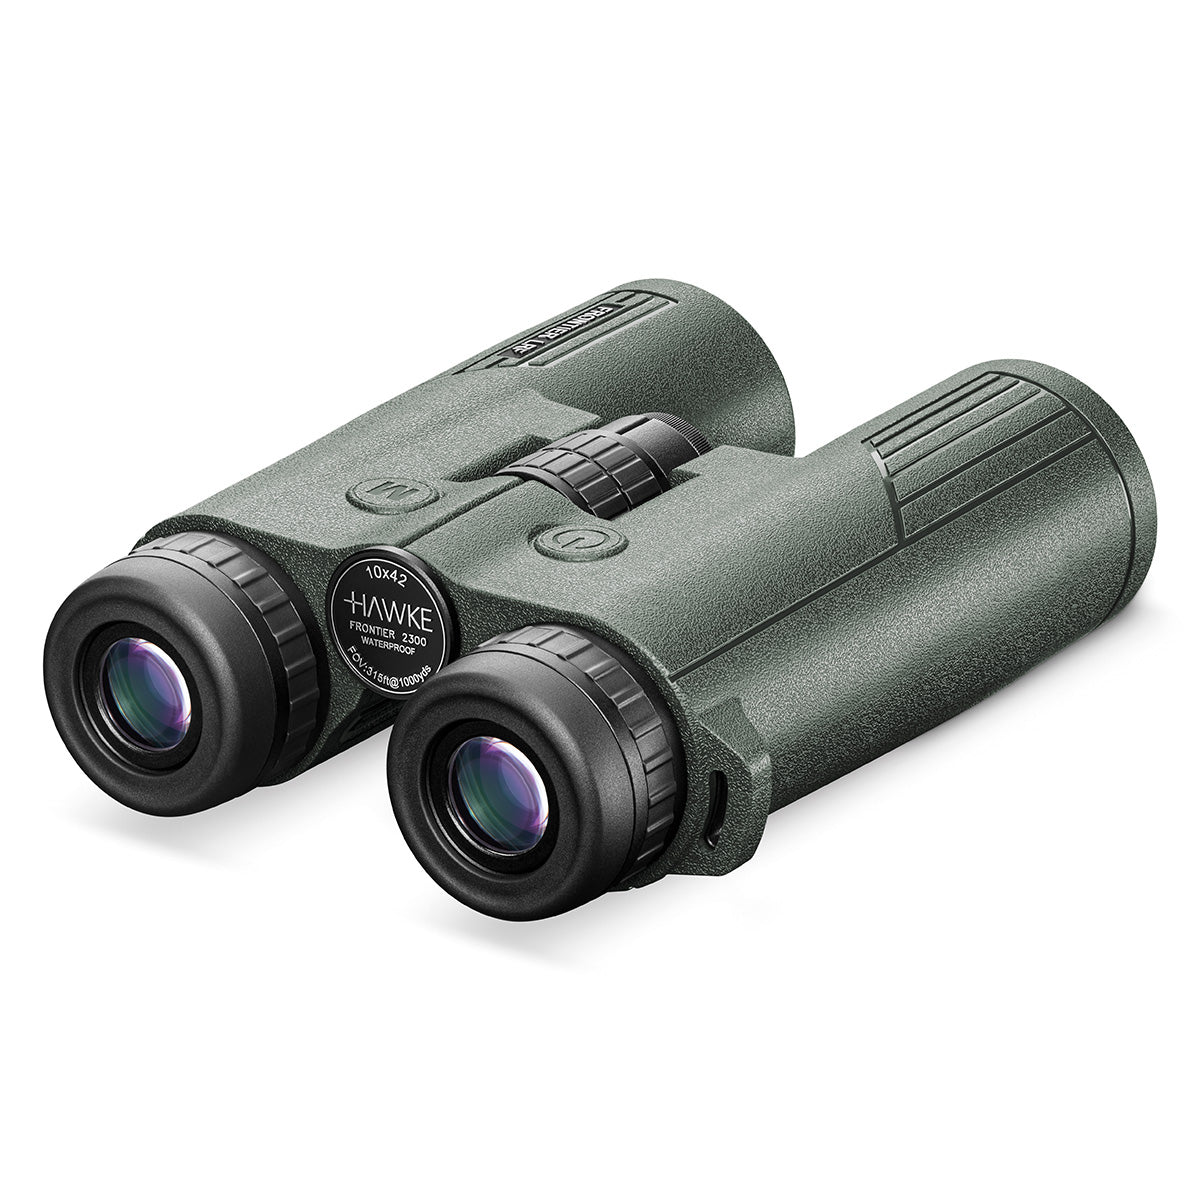 Hawke Frontier LRF 10x42 Binoculars - Green